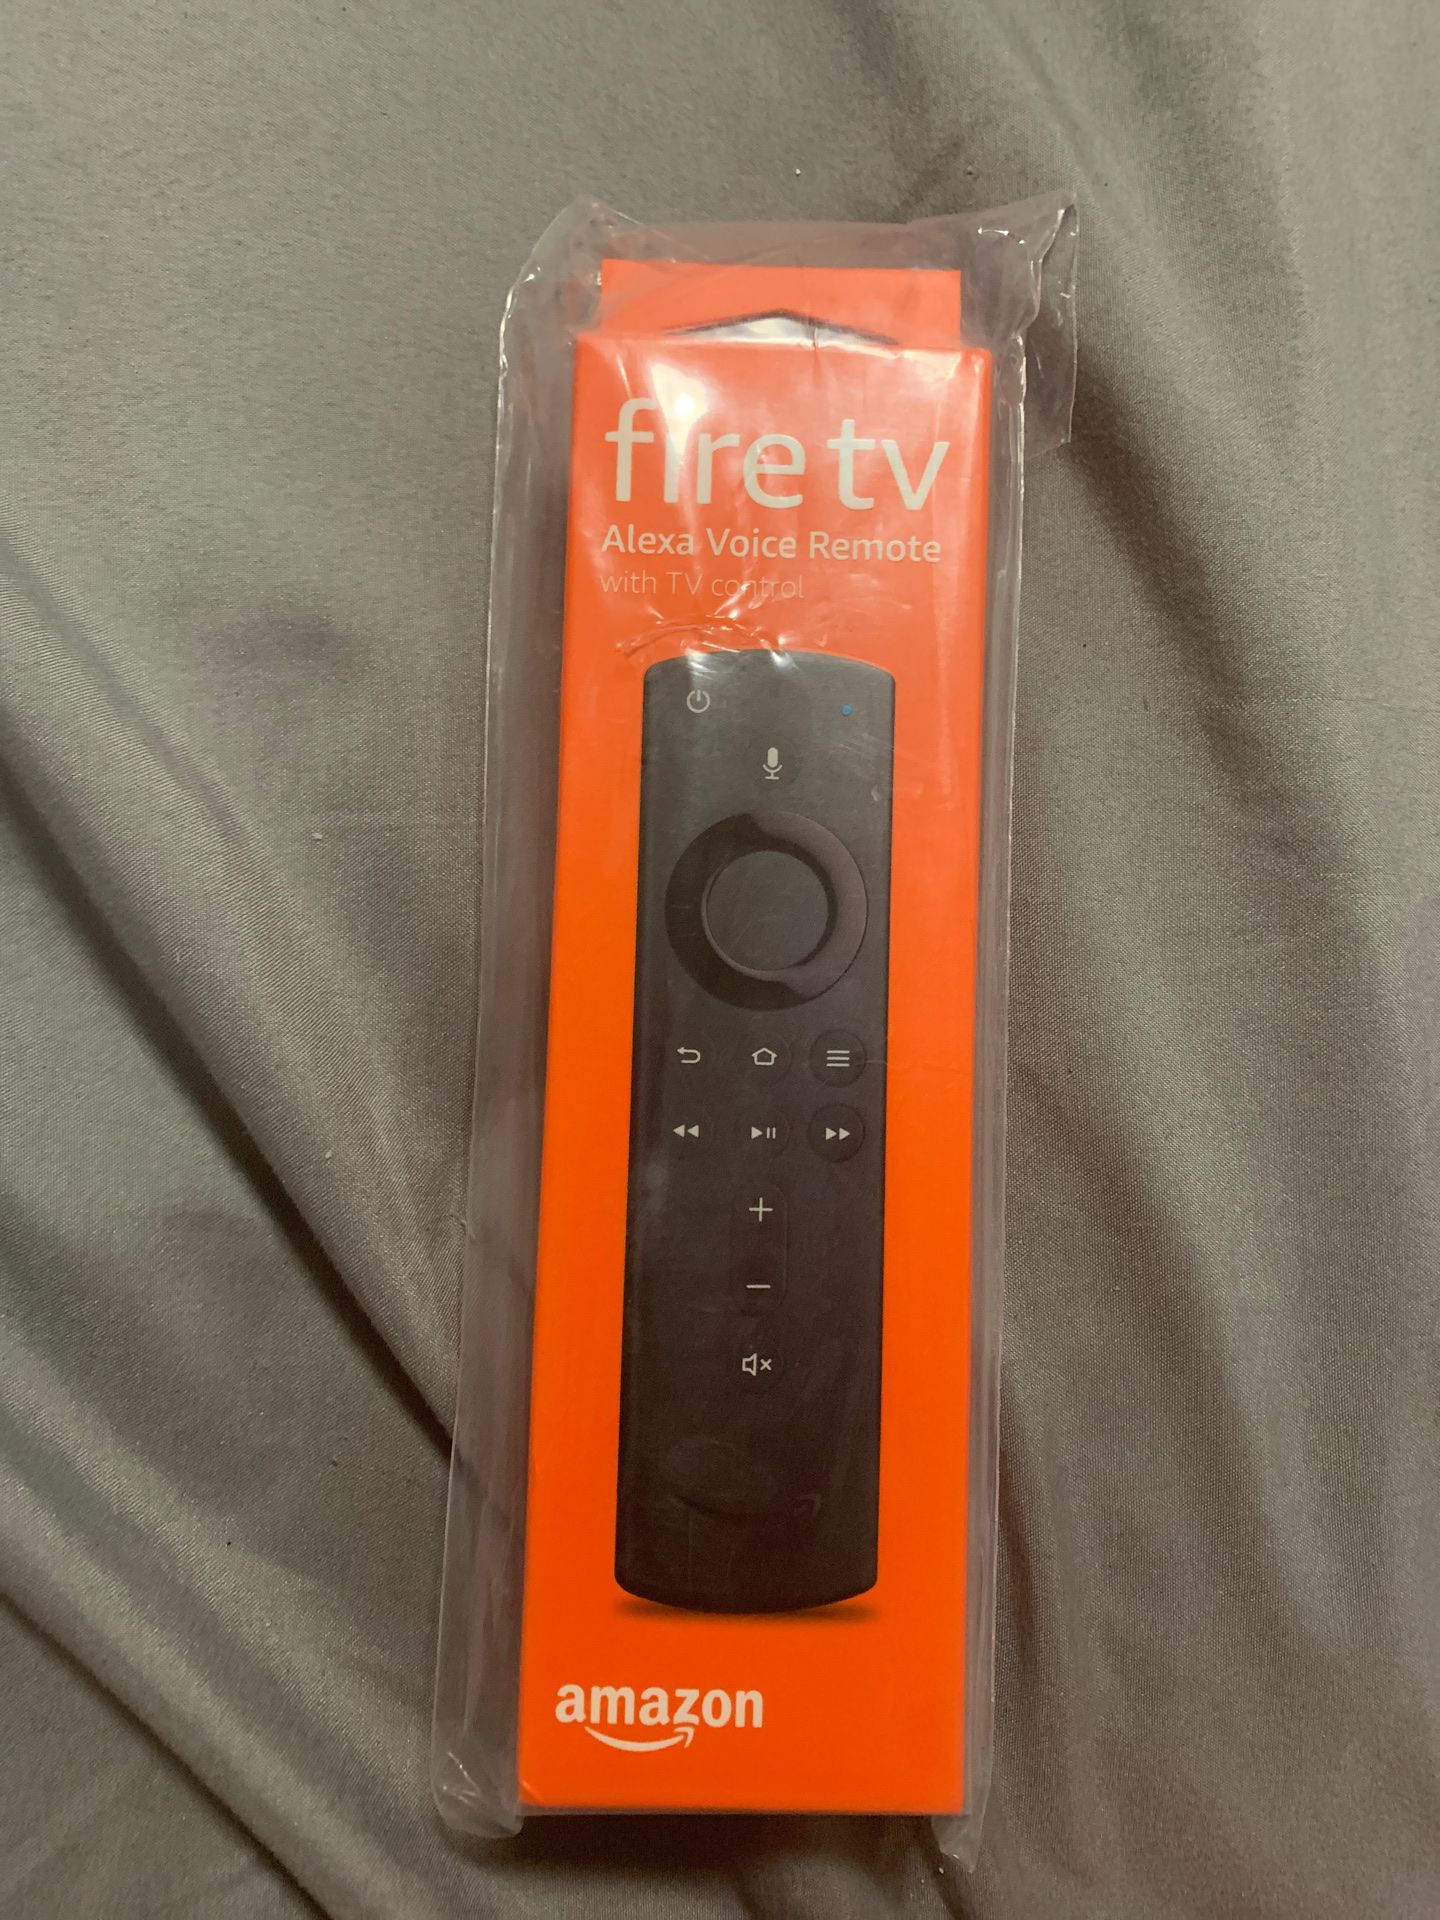 Fire tv Alexa voice remote control with TV control